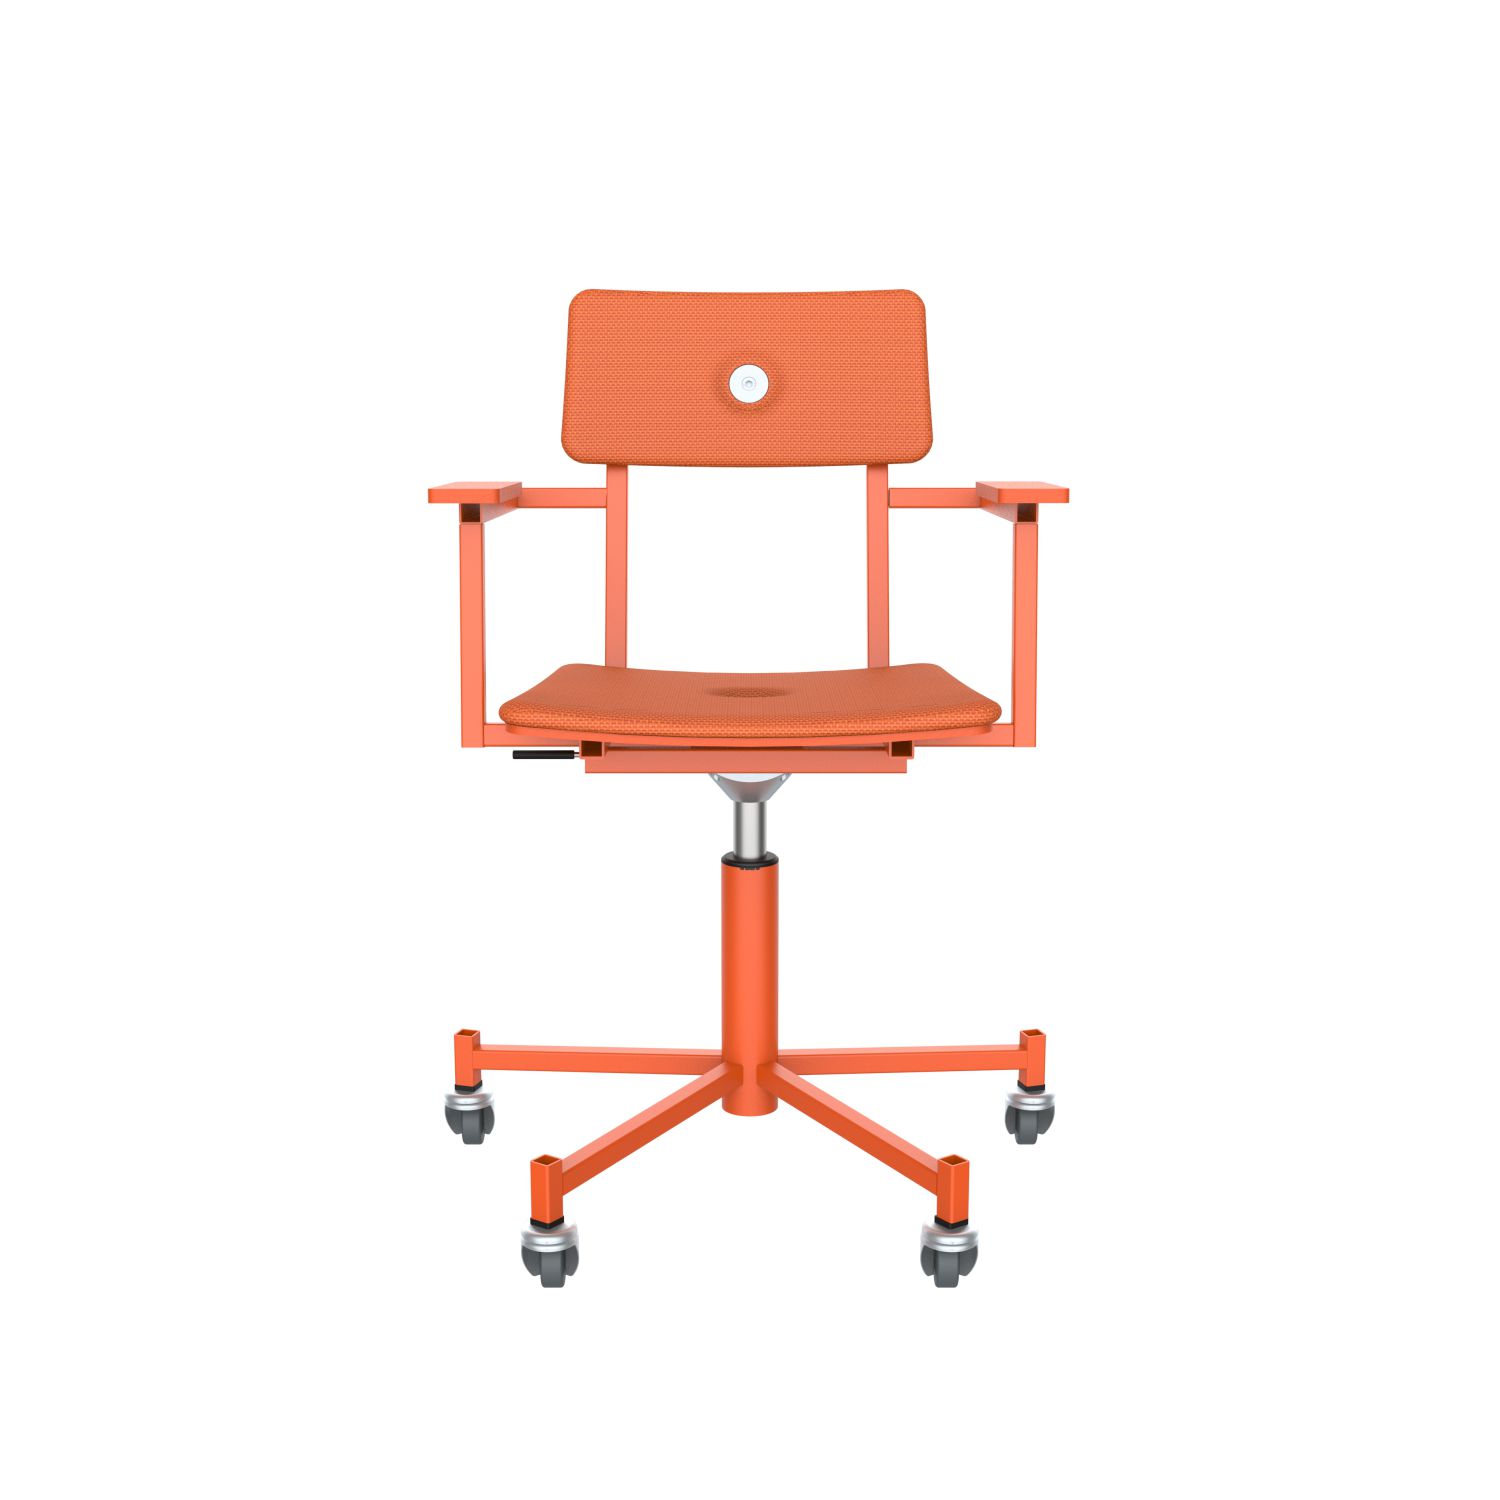 lensvelt piet hein eek mitw upholstered office chair with armrests burn orange 102 pure orange ral2004 with wheels